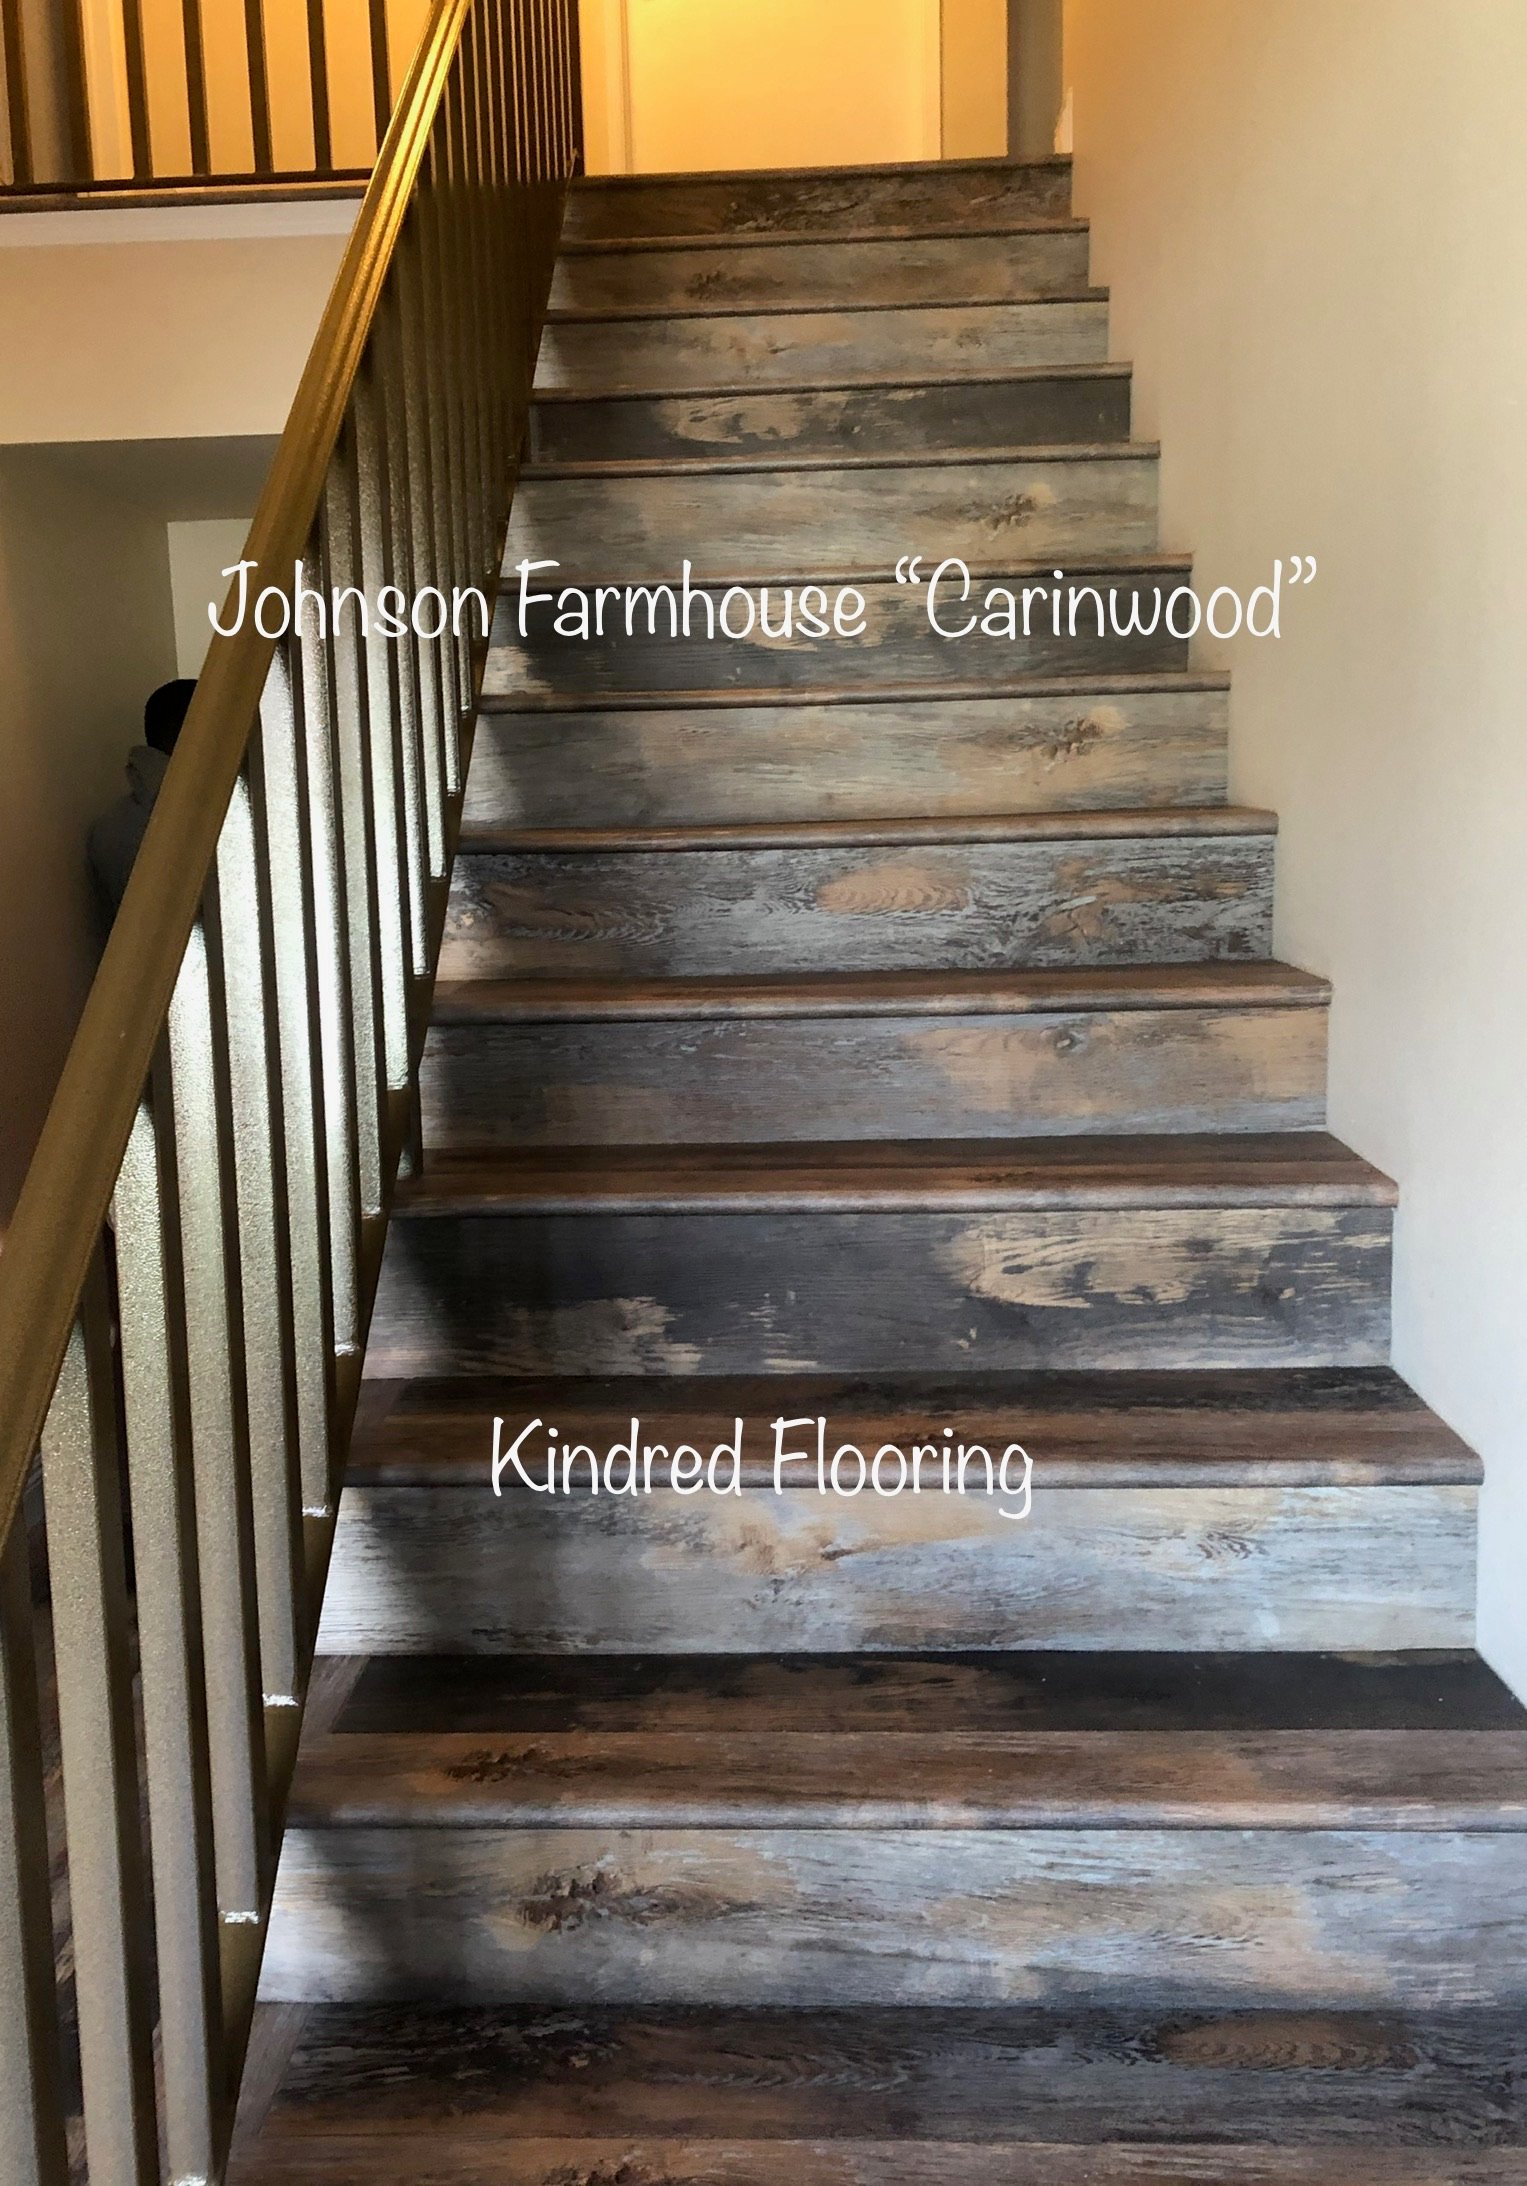 Farmhouse "Carinwood"